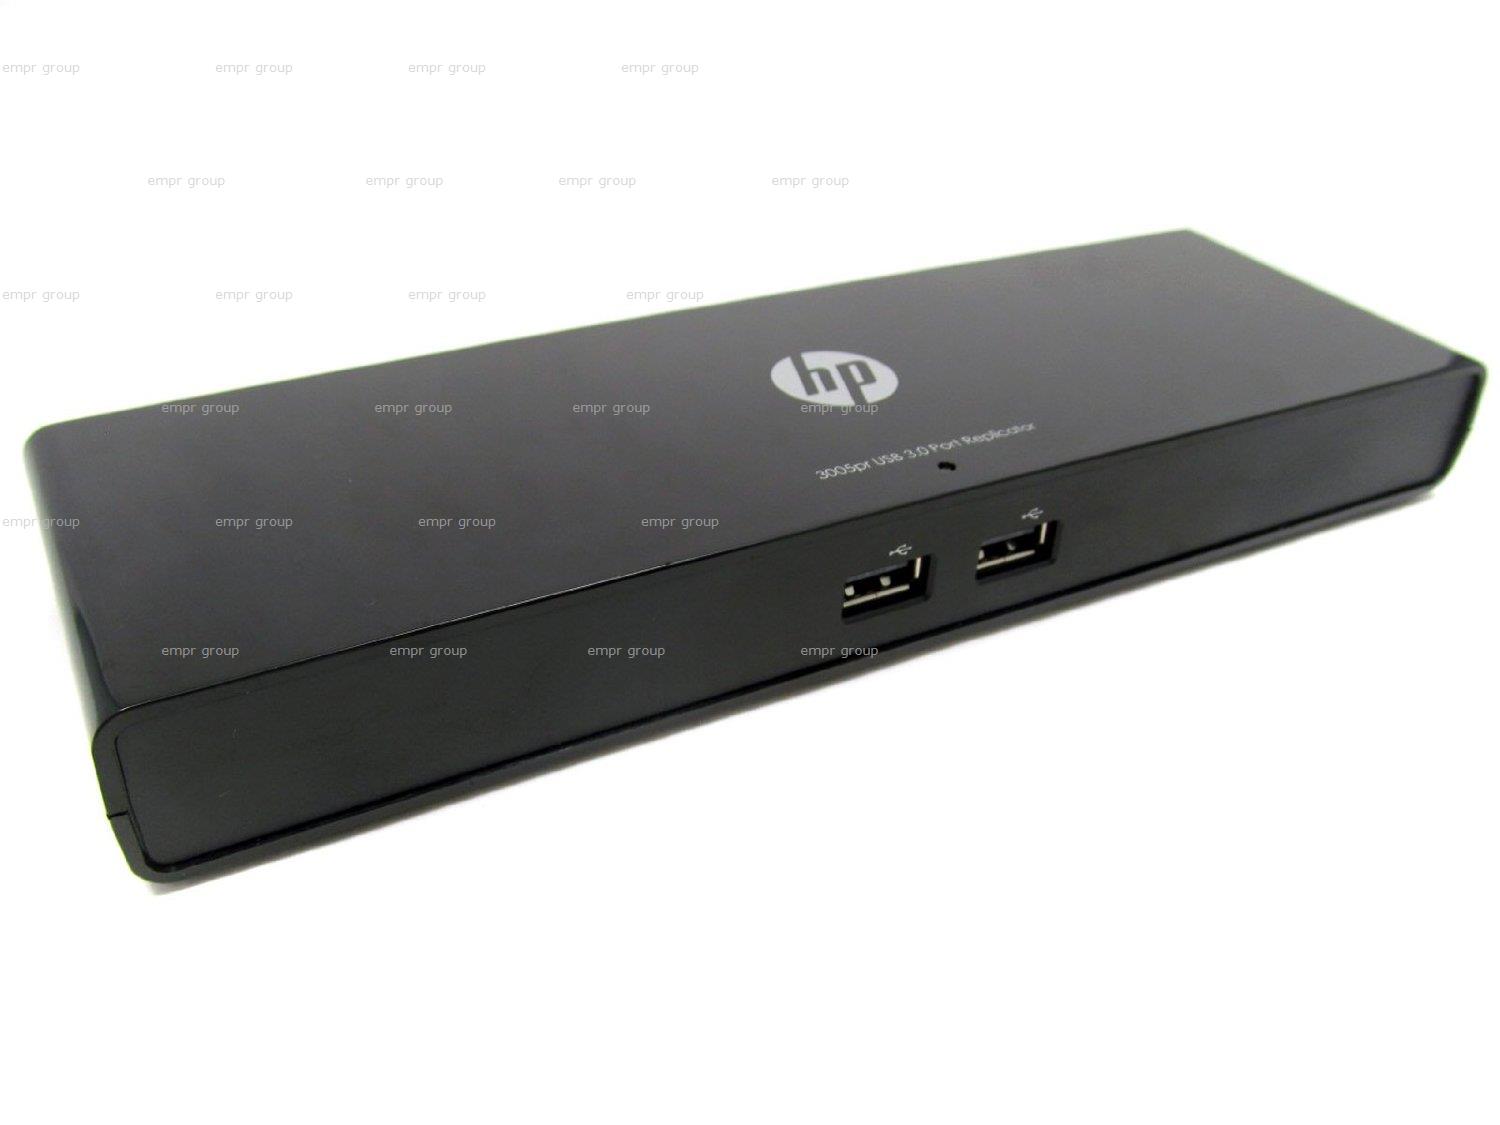 HP ProBook 450 G2 Laptop (K8Q47PP) Port Replicator 690650-001